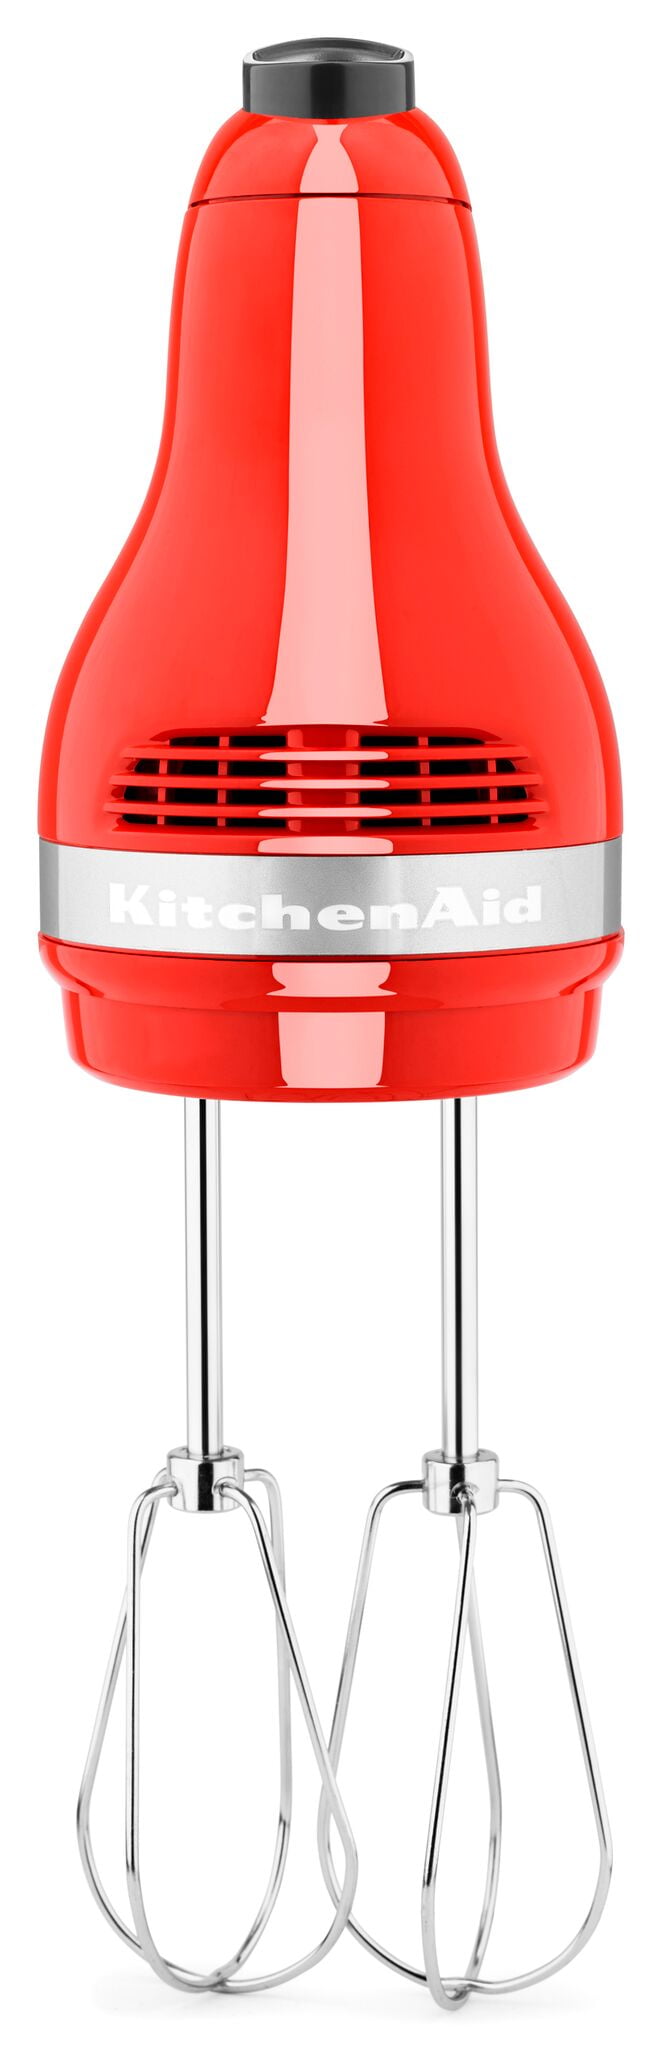 KitchenAid KHM5DHWH5 - 5-Speed Hand Mixer 